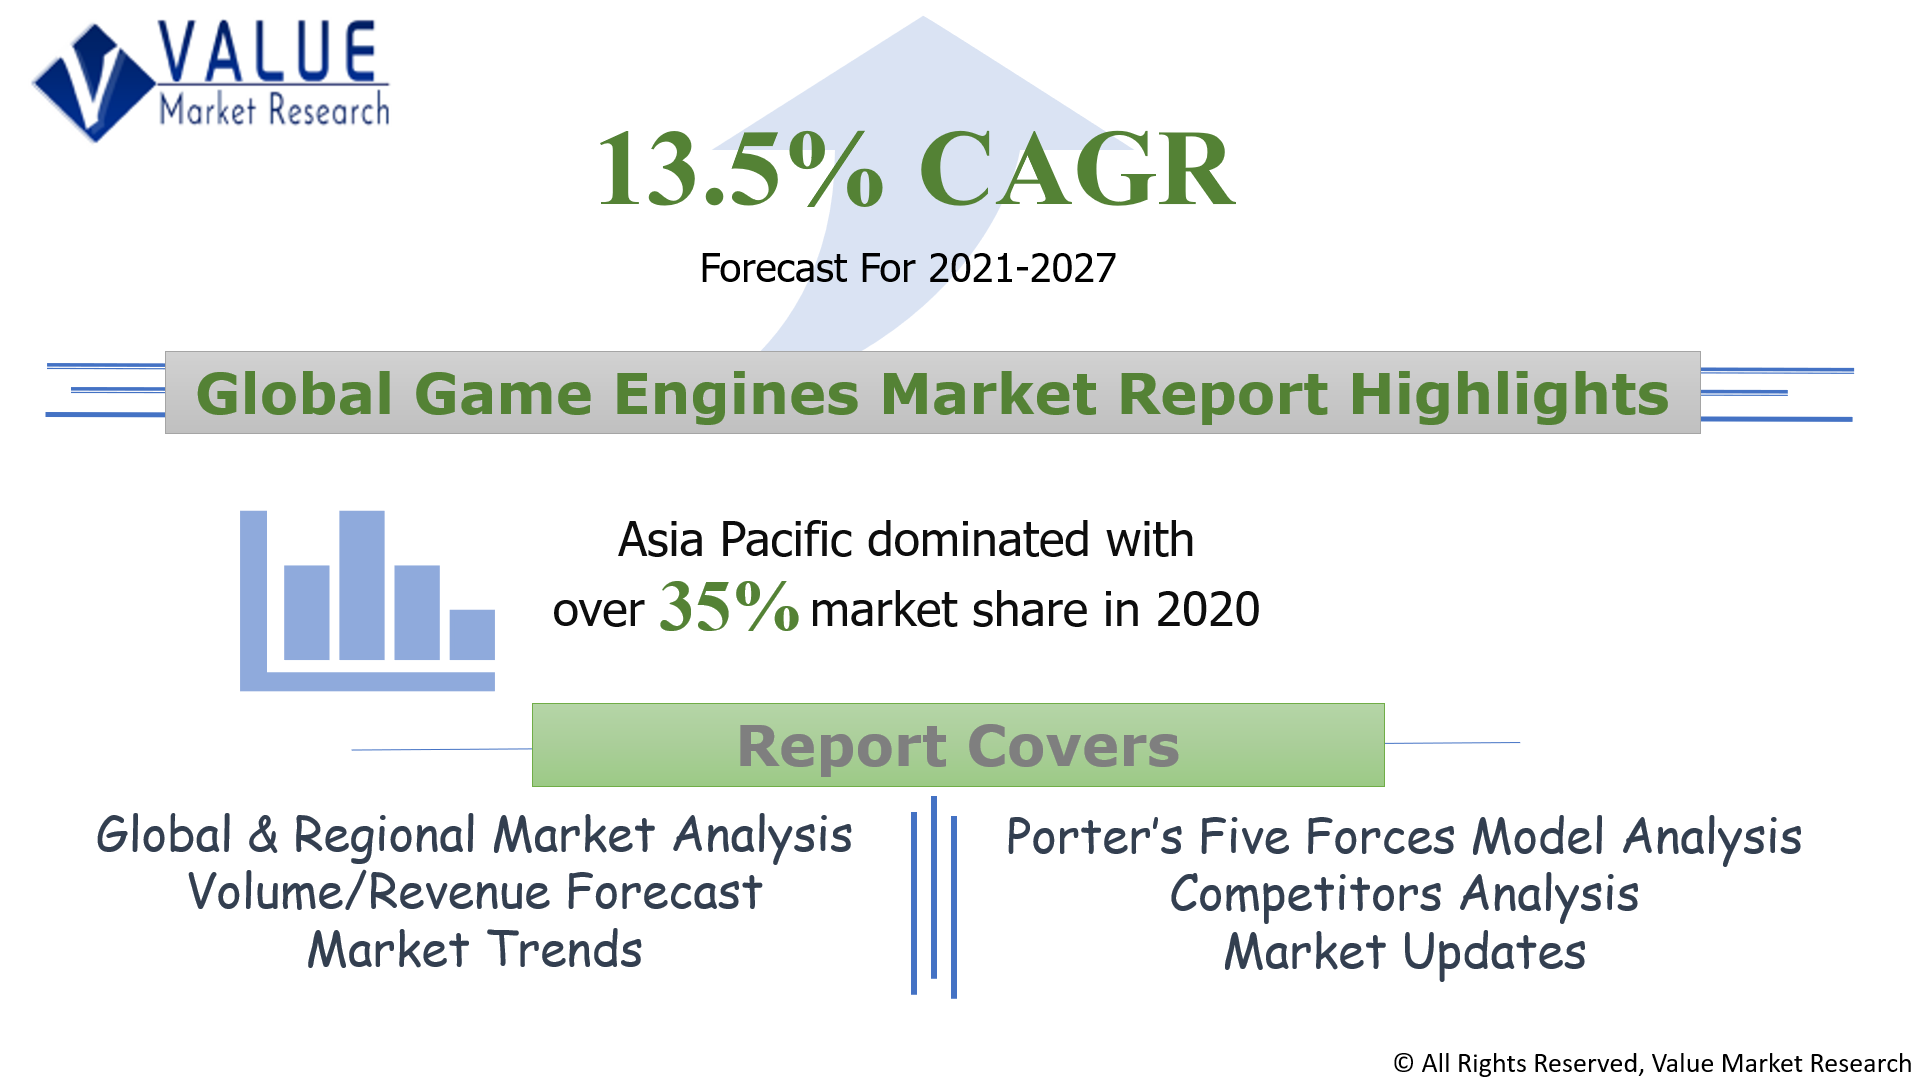 Global Game Engines Market Share